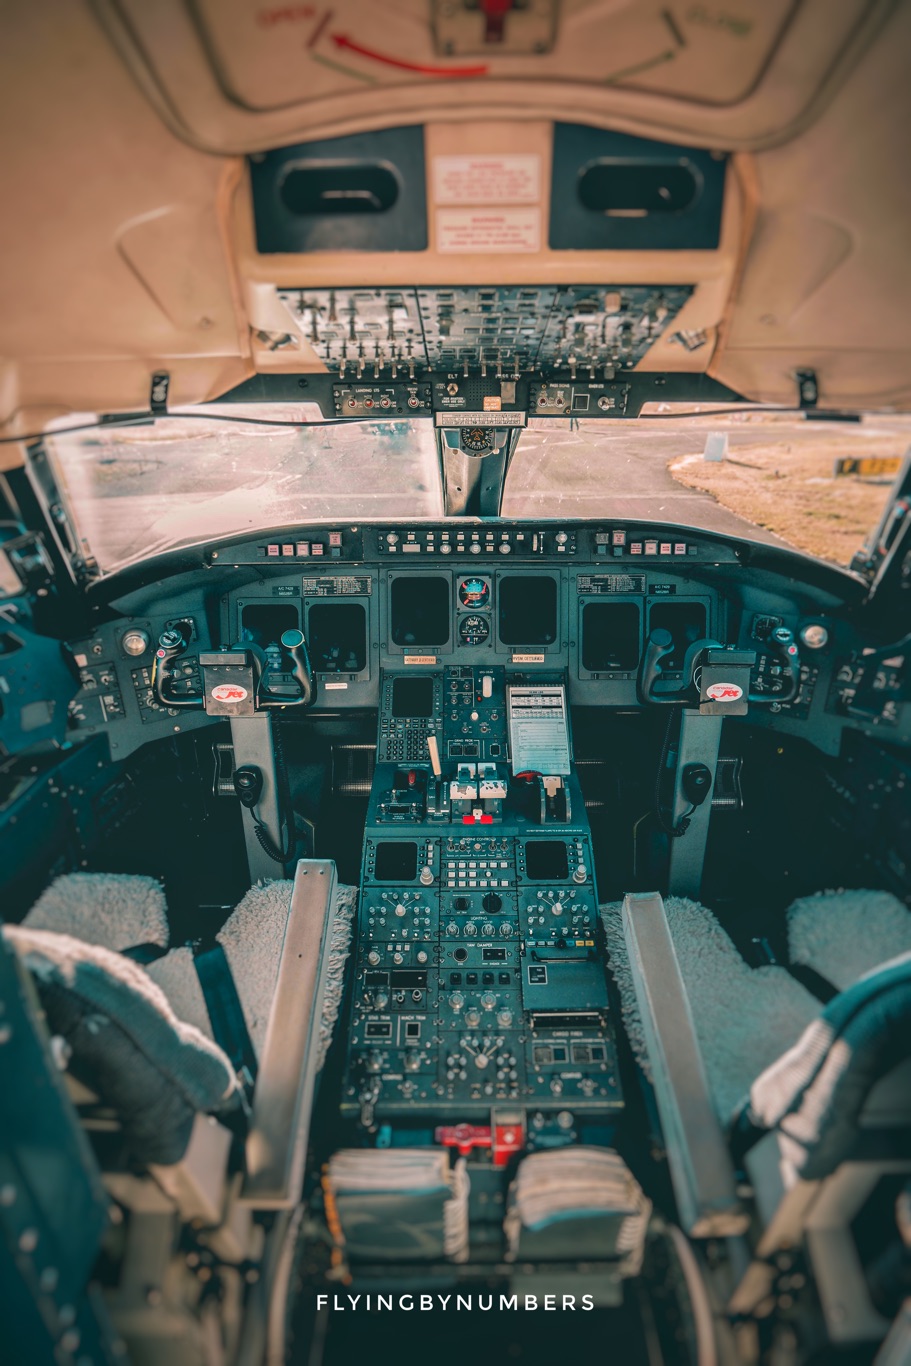 Empty aircraft cockpit